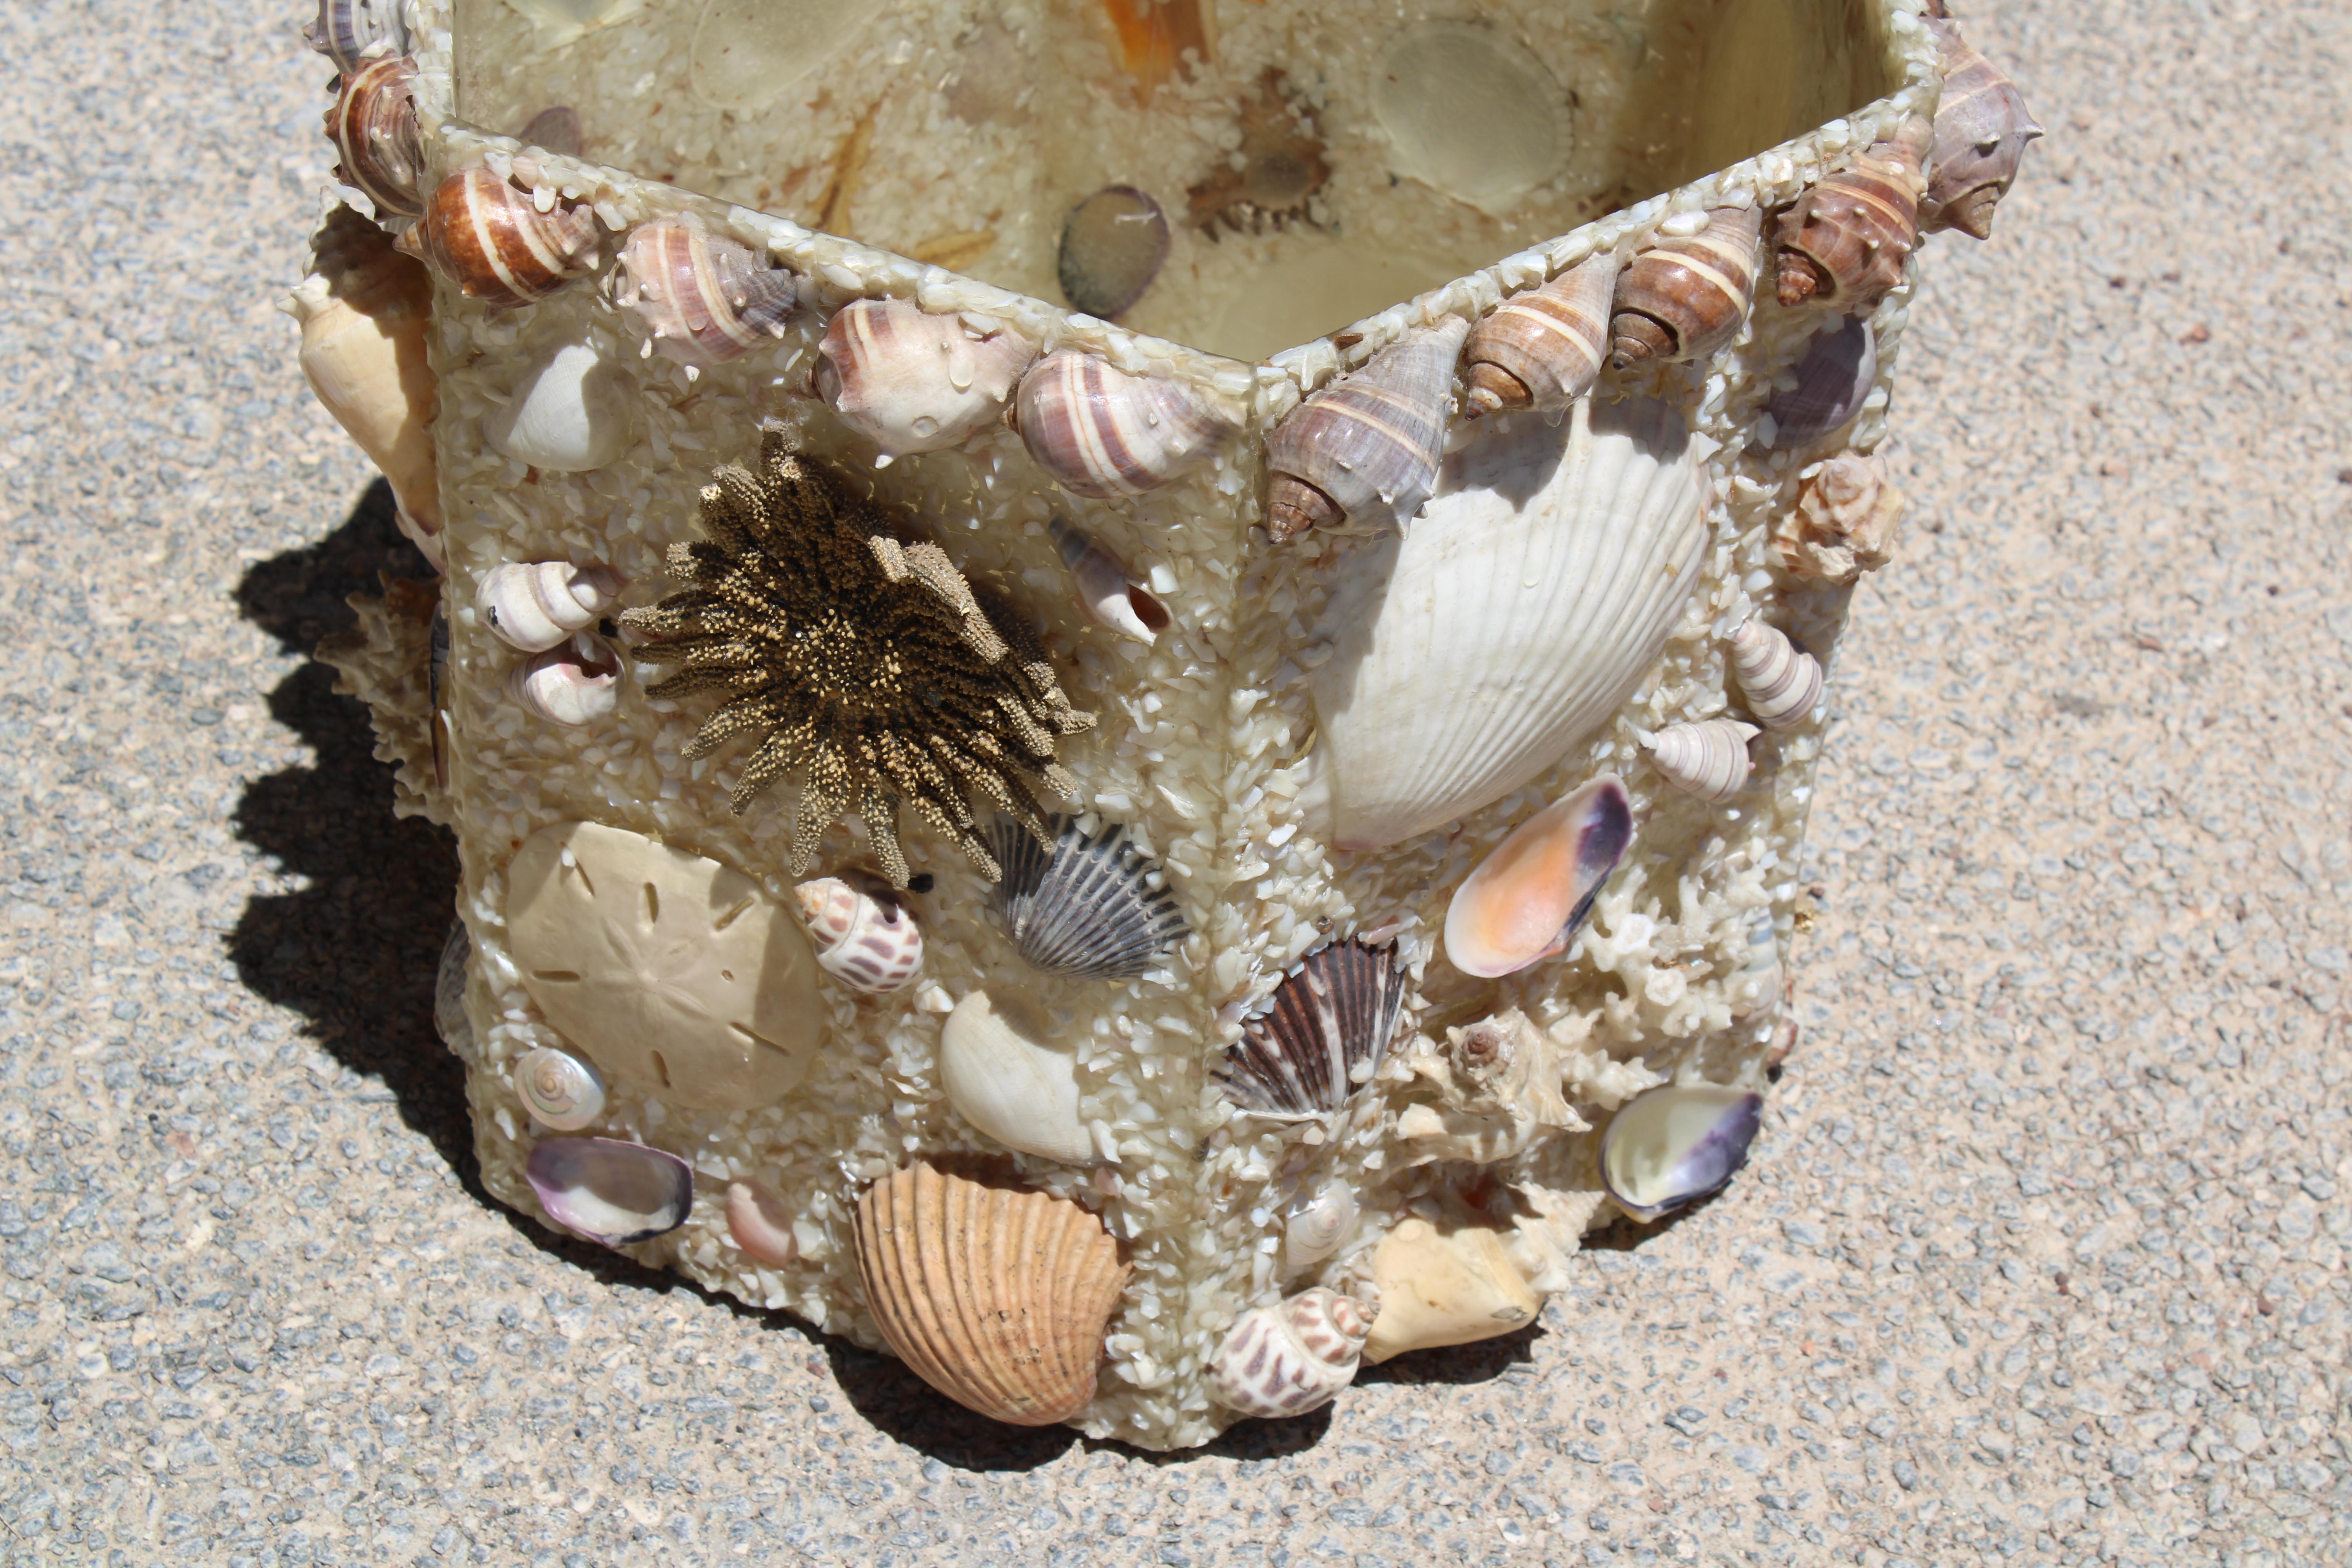 Six sided resin waste basket or planter embellished with nautical seashells. Waste Basket measures 13.5